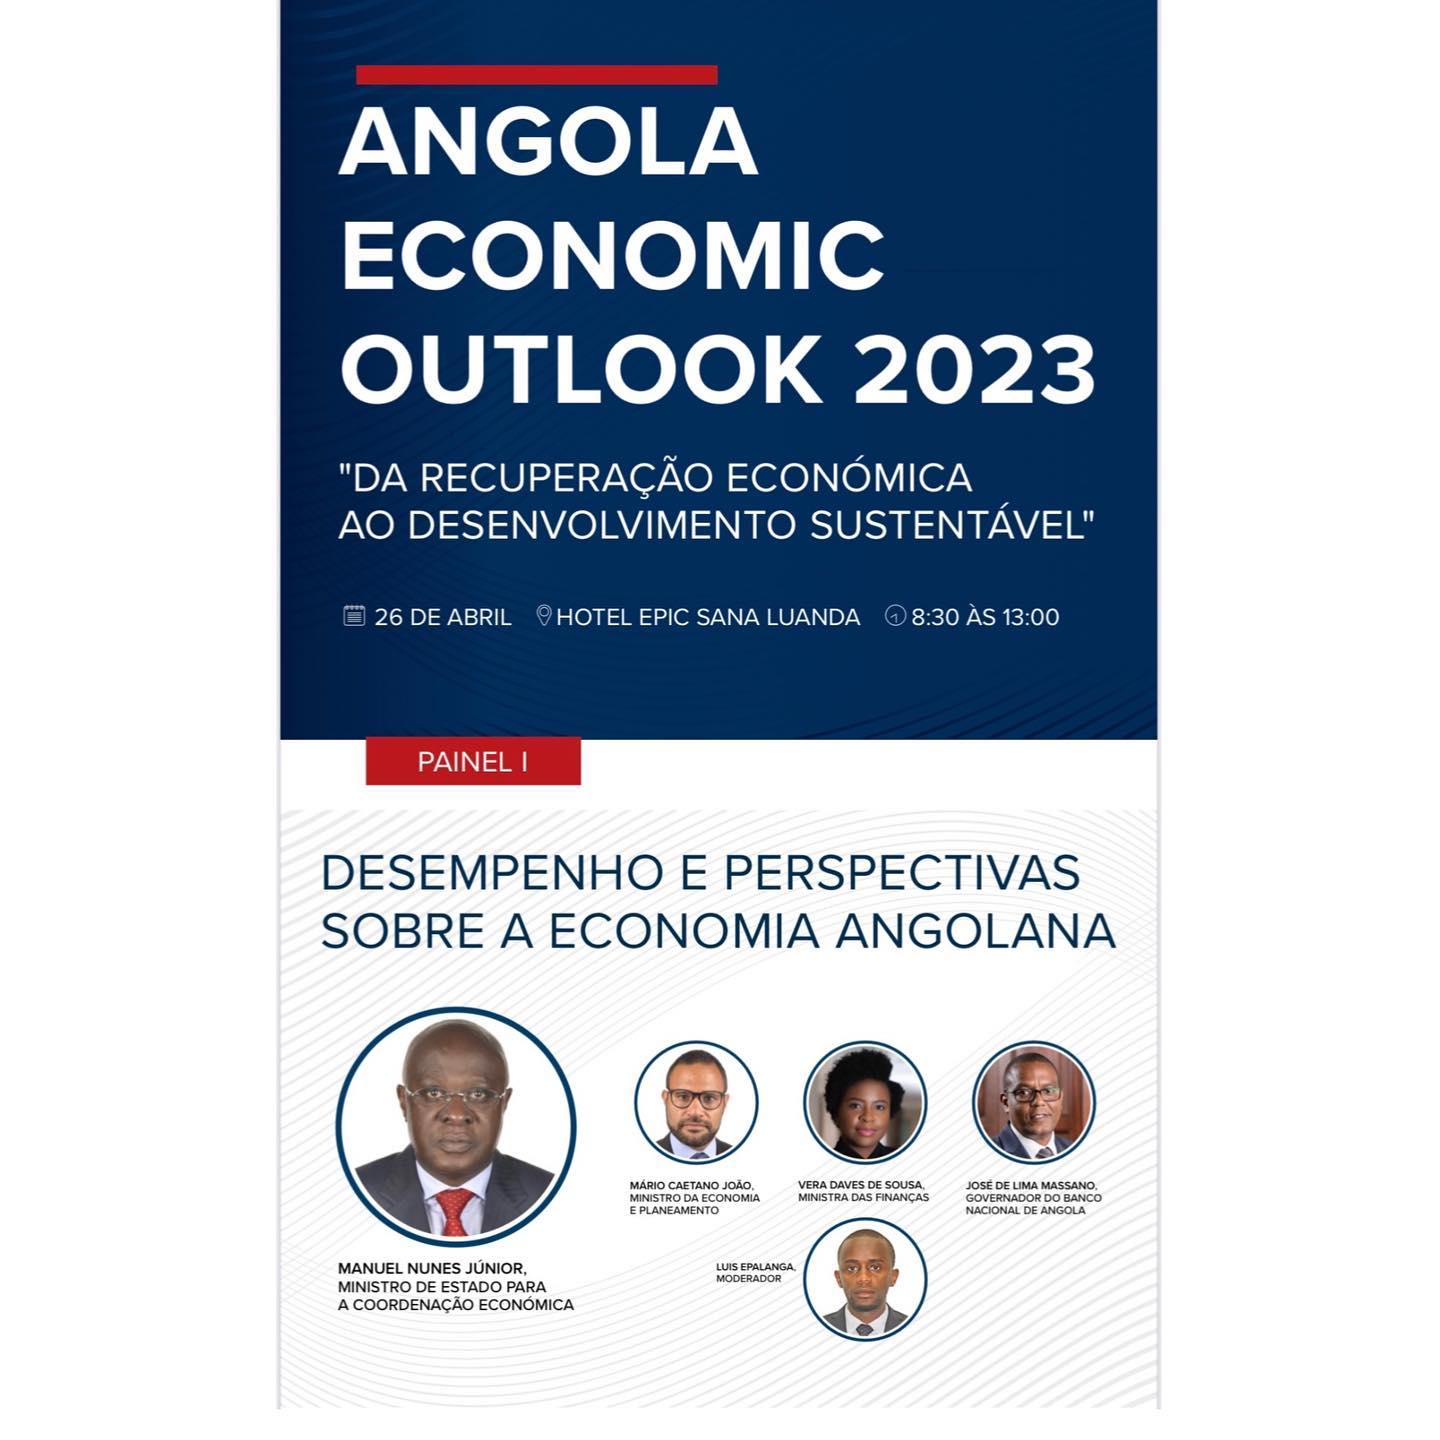 Conferência 'ANGOLA ECONOMIC OUTLOOK 2023' realizase hoje em Luanda